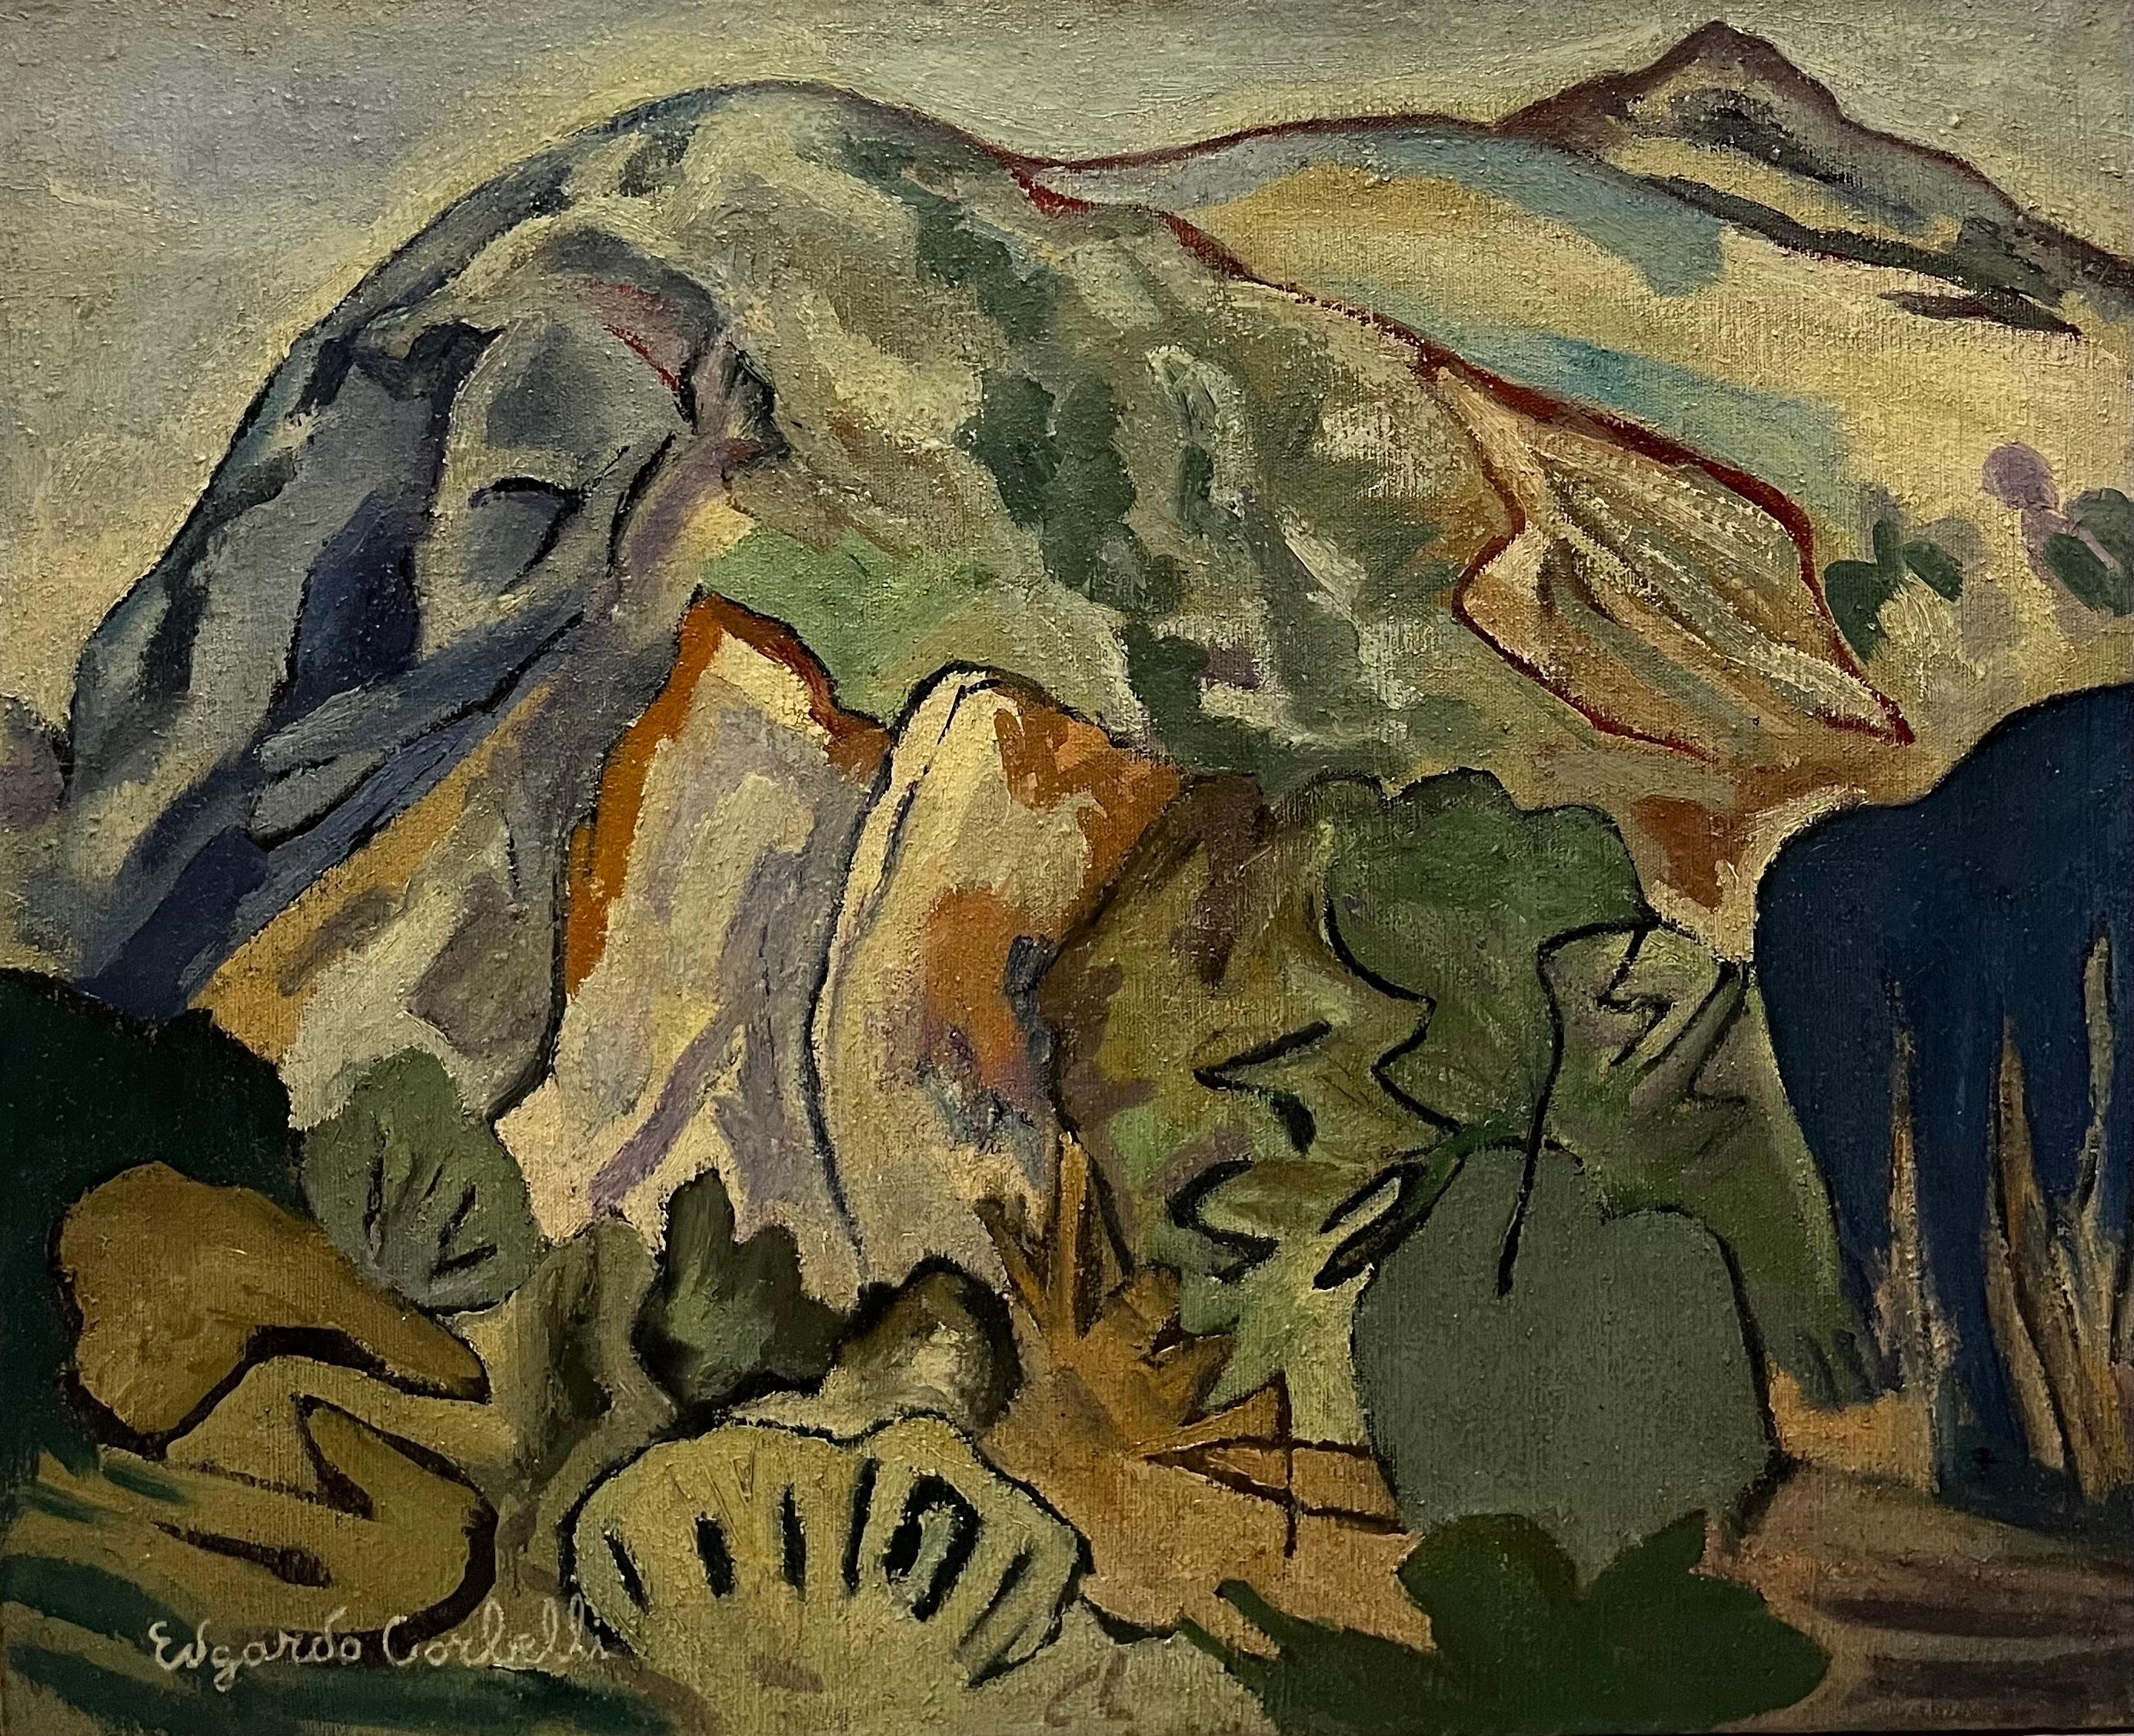 Edgardo Corbelli Landscape Painting - "Green landscape" Oil cm. 81 x 66